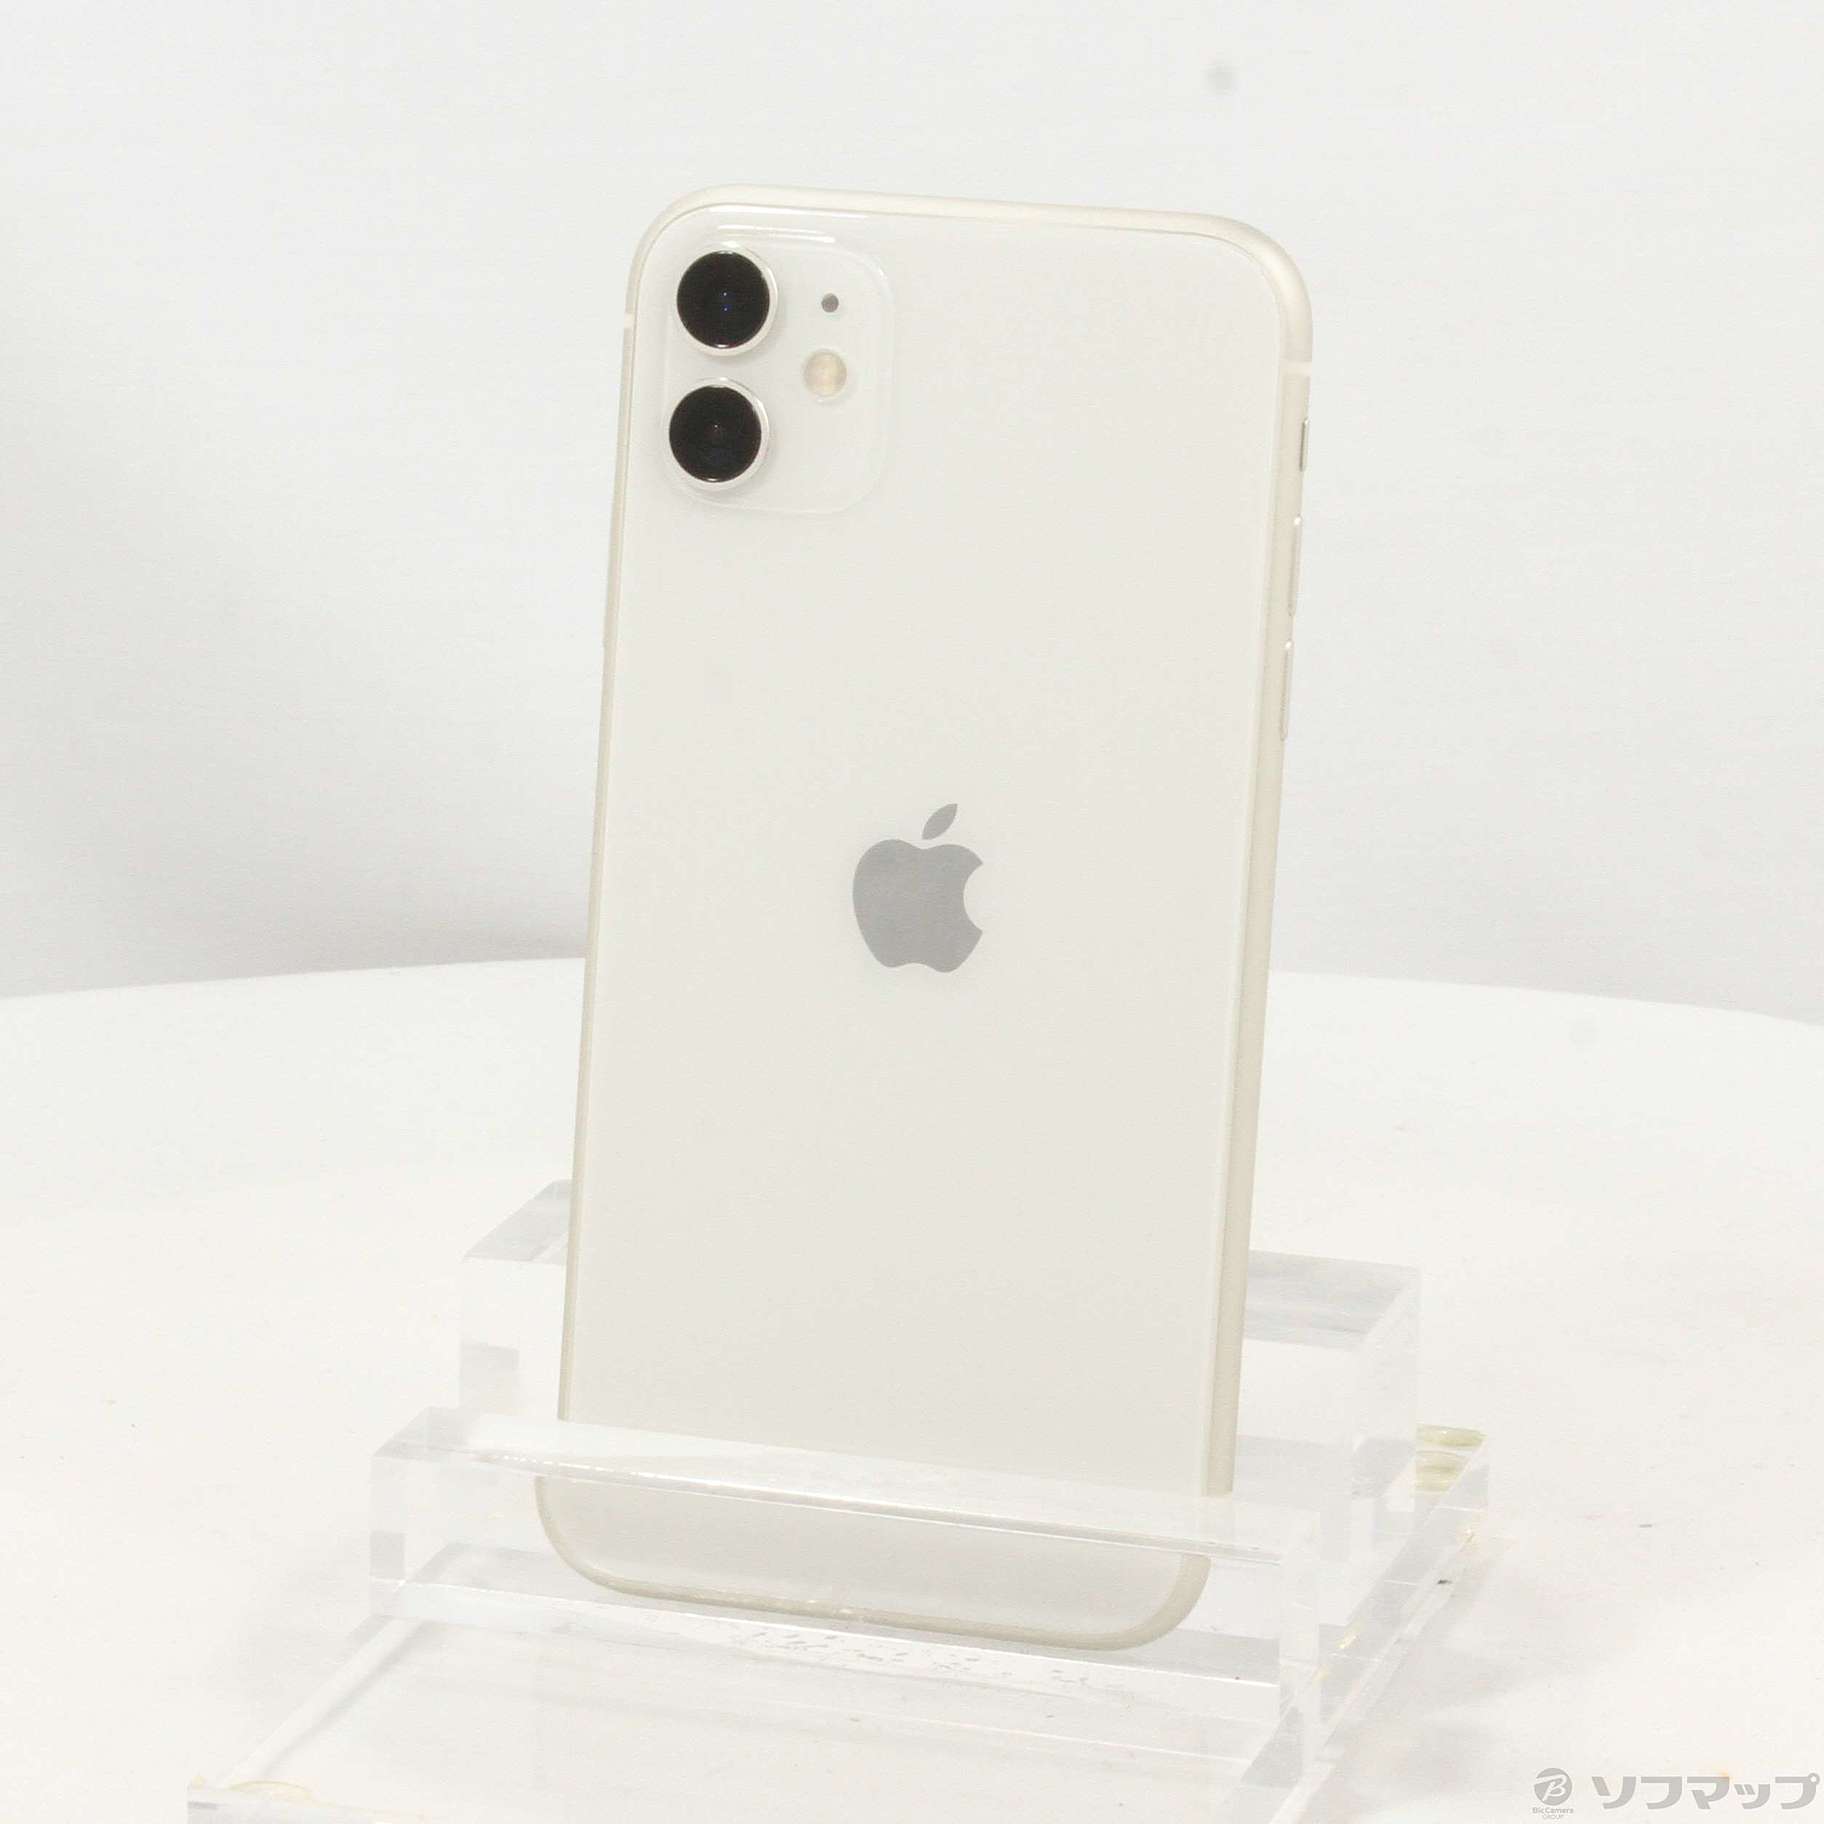 iPhone 11 ホワイト 64 GB SIMフリー